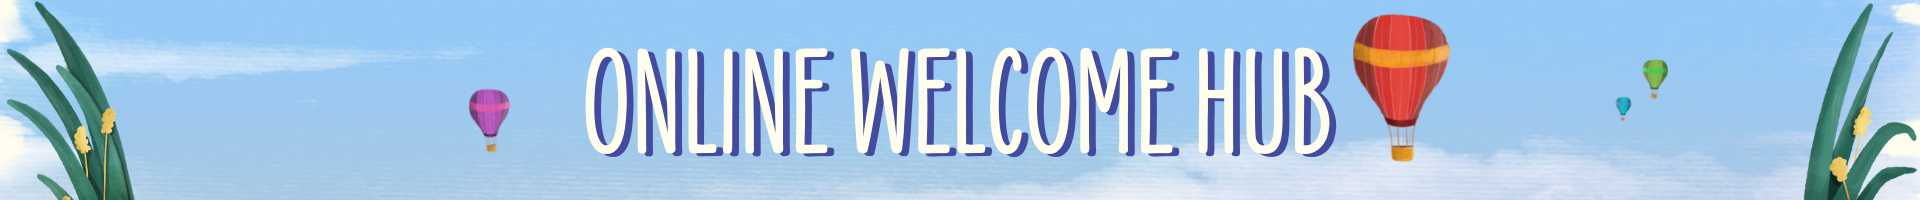 Online welcome hub